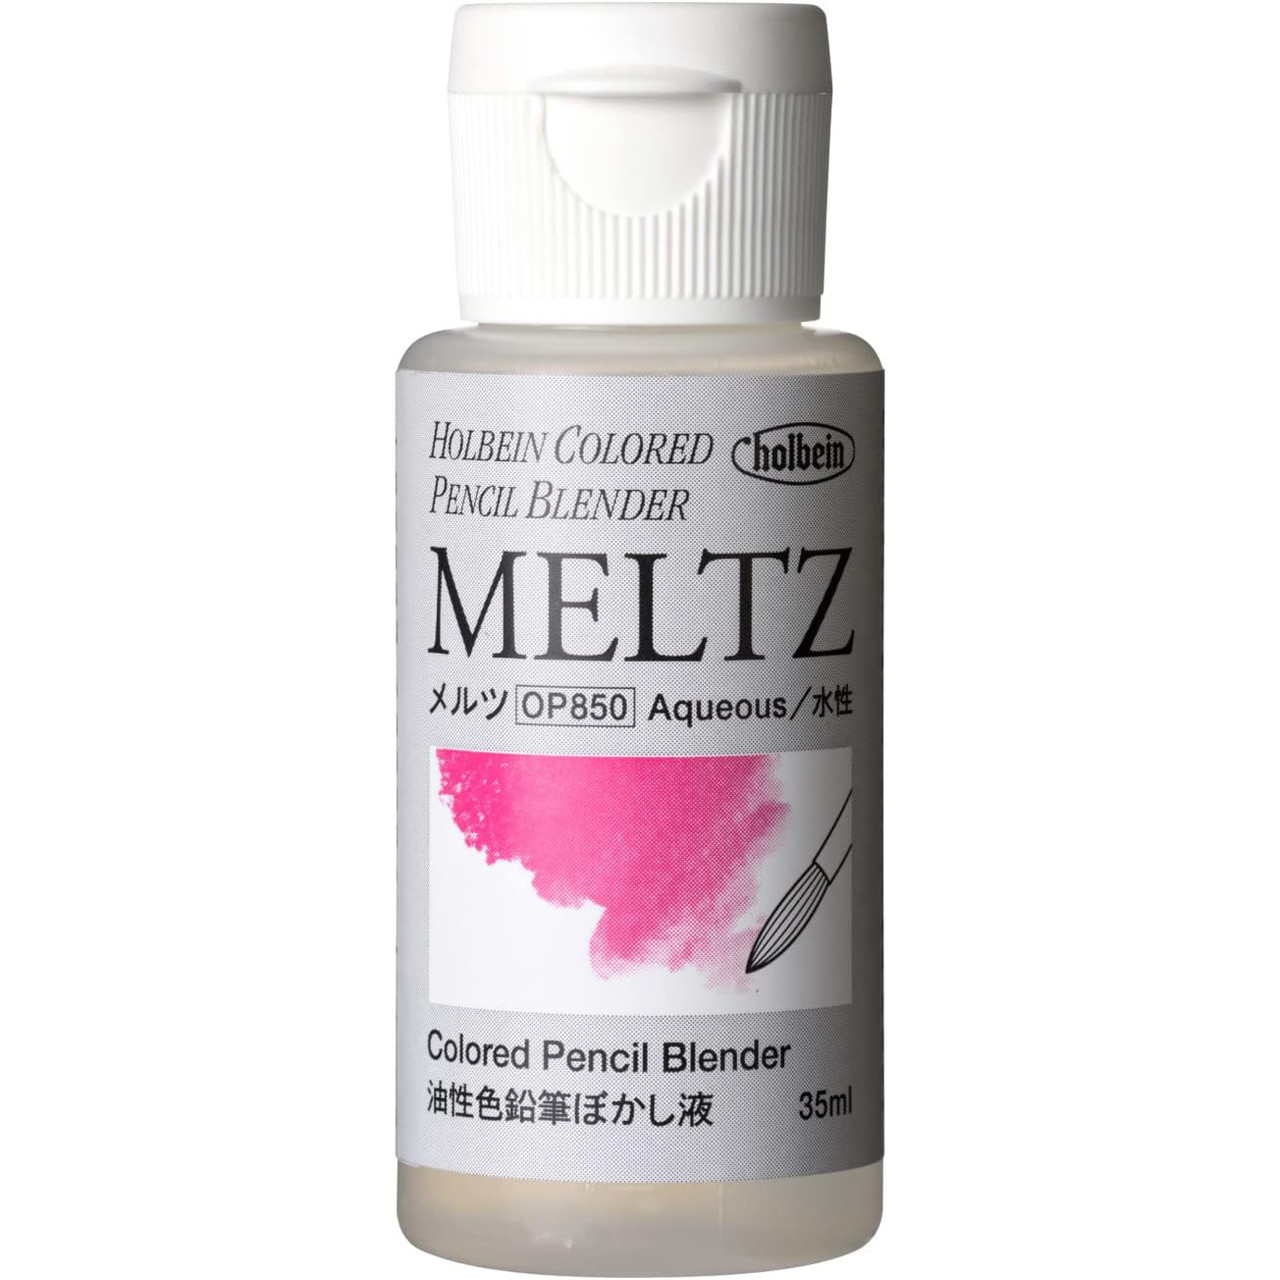 Meltz Colored Pencil Blender 35ml bottle